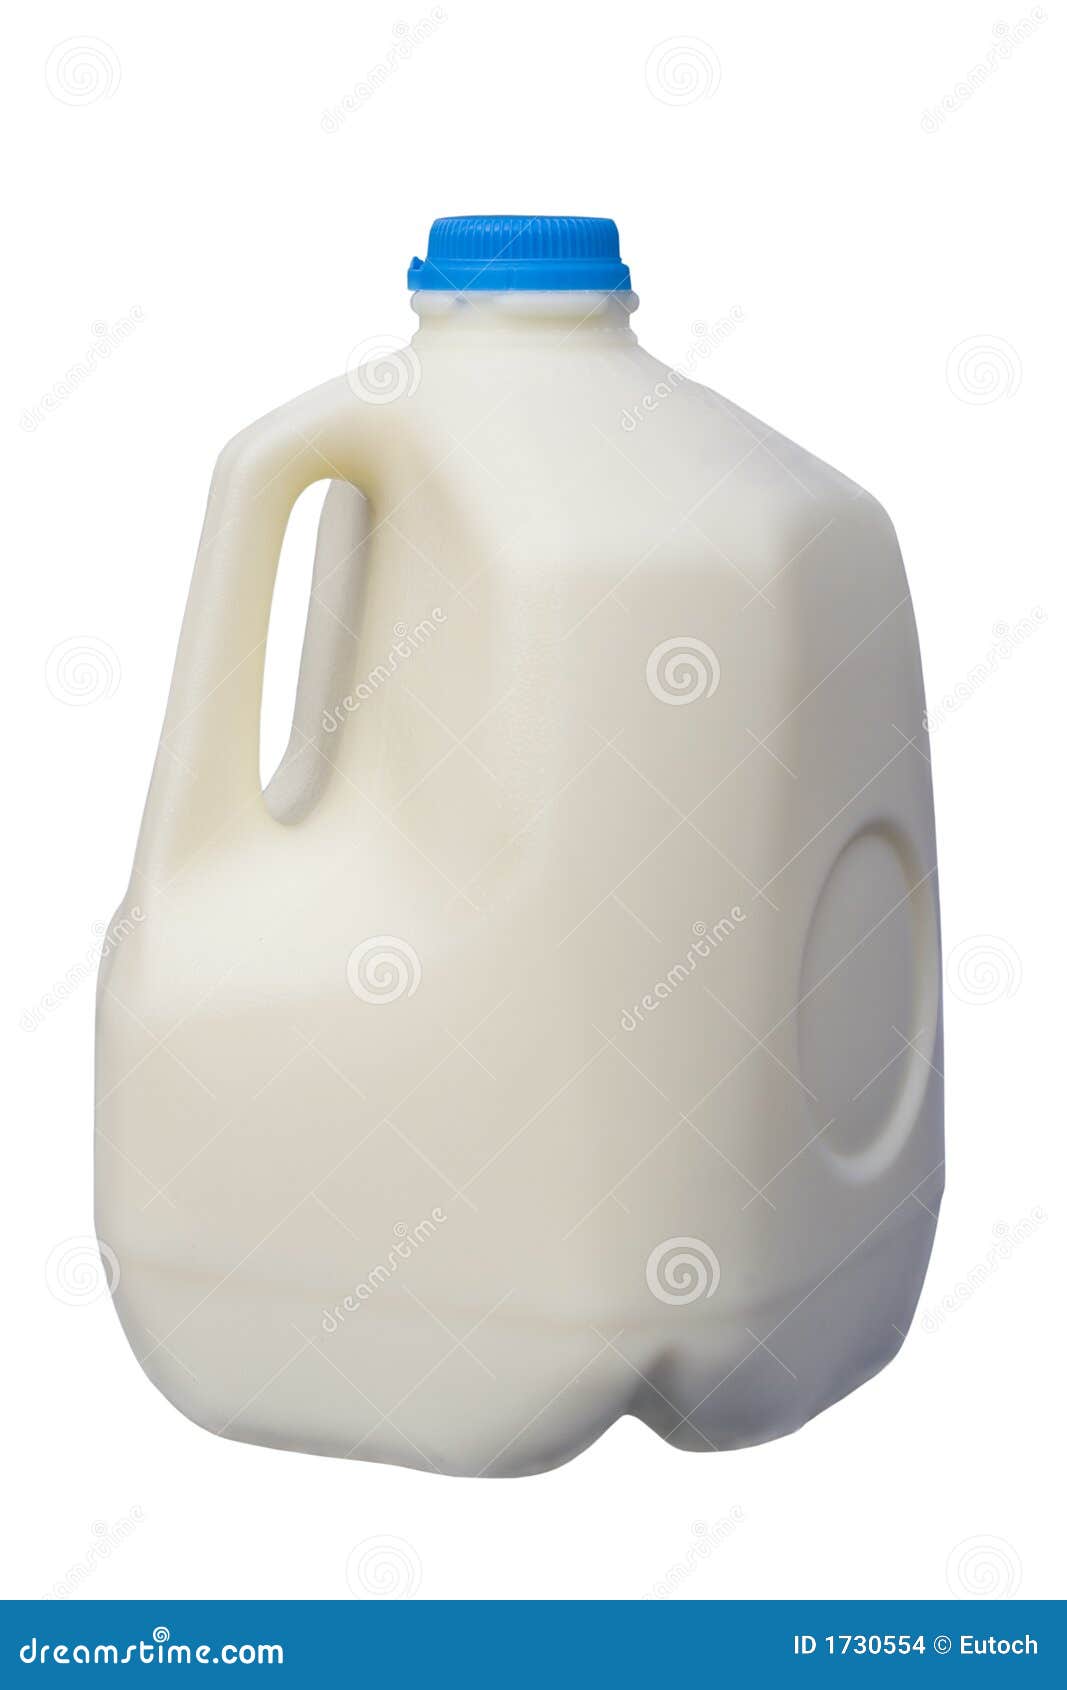 airtight one gallon milk jug with a blue cap on